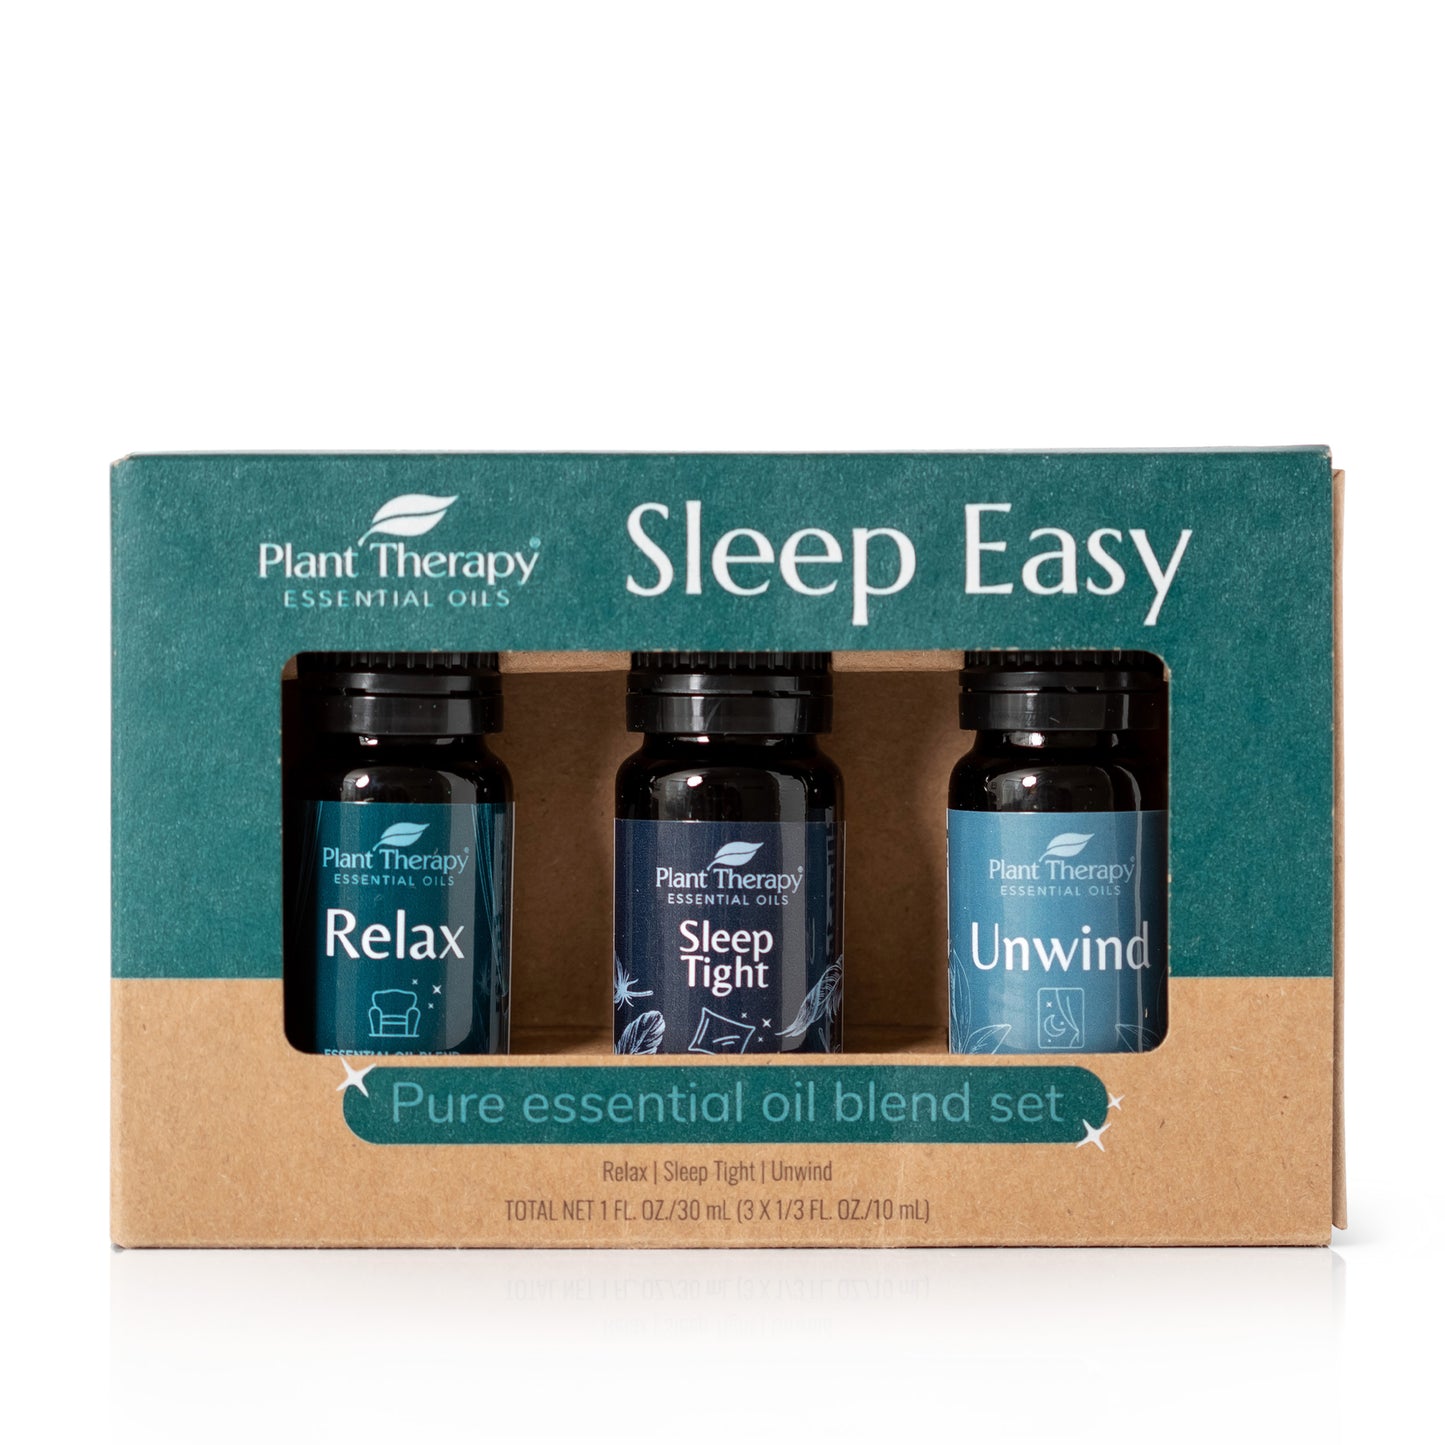 Sleep Easy Essential Oil Blend Set outer box